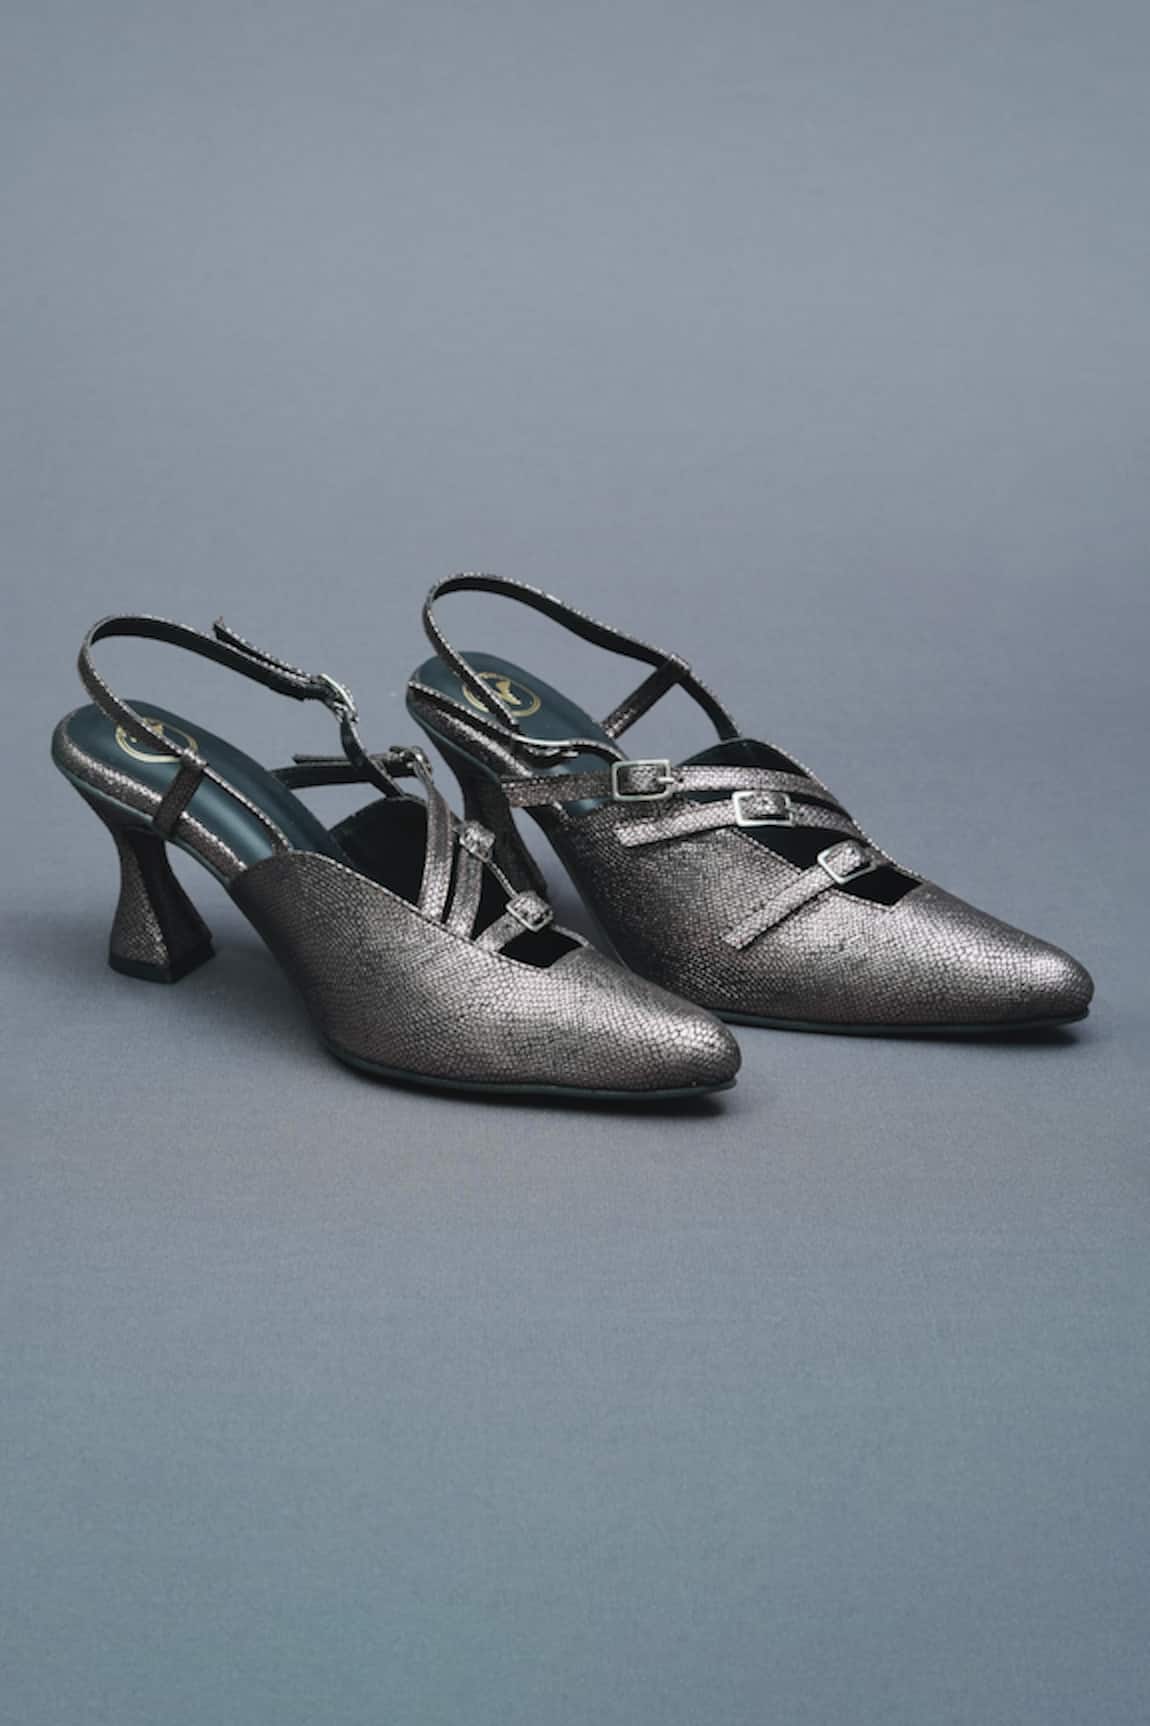 Sana K luxurious Footwear Perry Shimmery Textured Buckle Heels